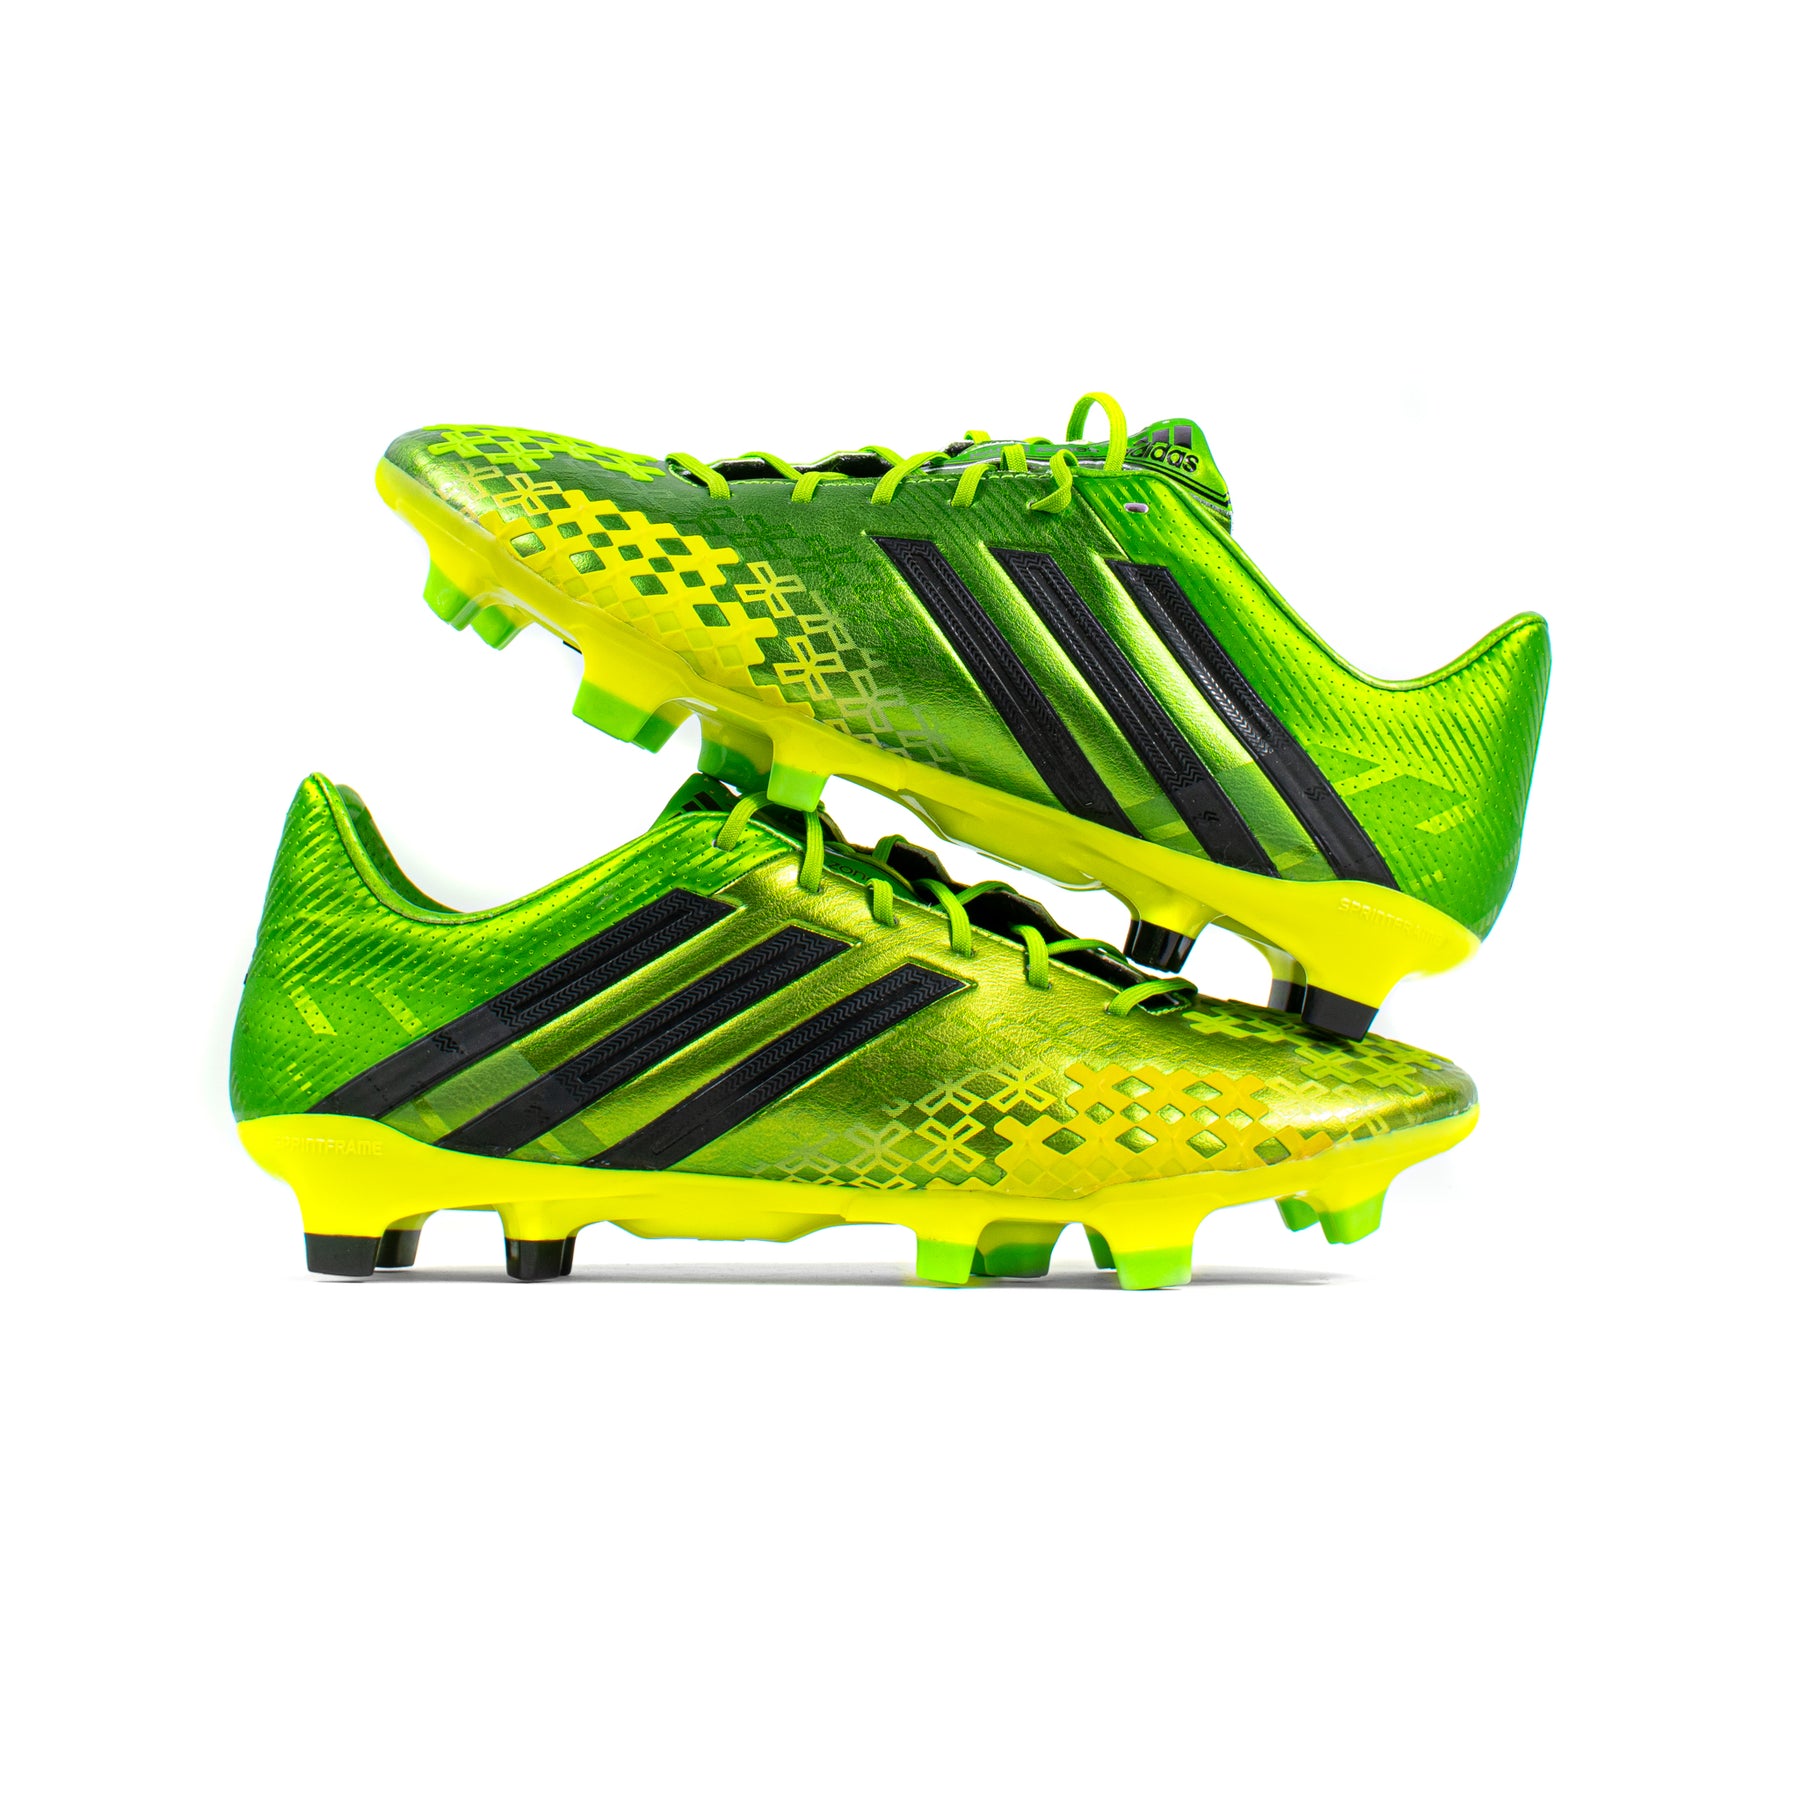 Adidas Predator Lz Lethal Zone Ii Green Fg – Classic Soccer Cleats